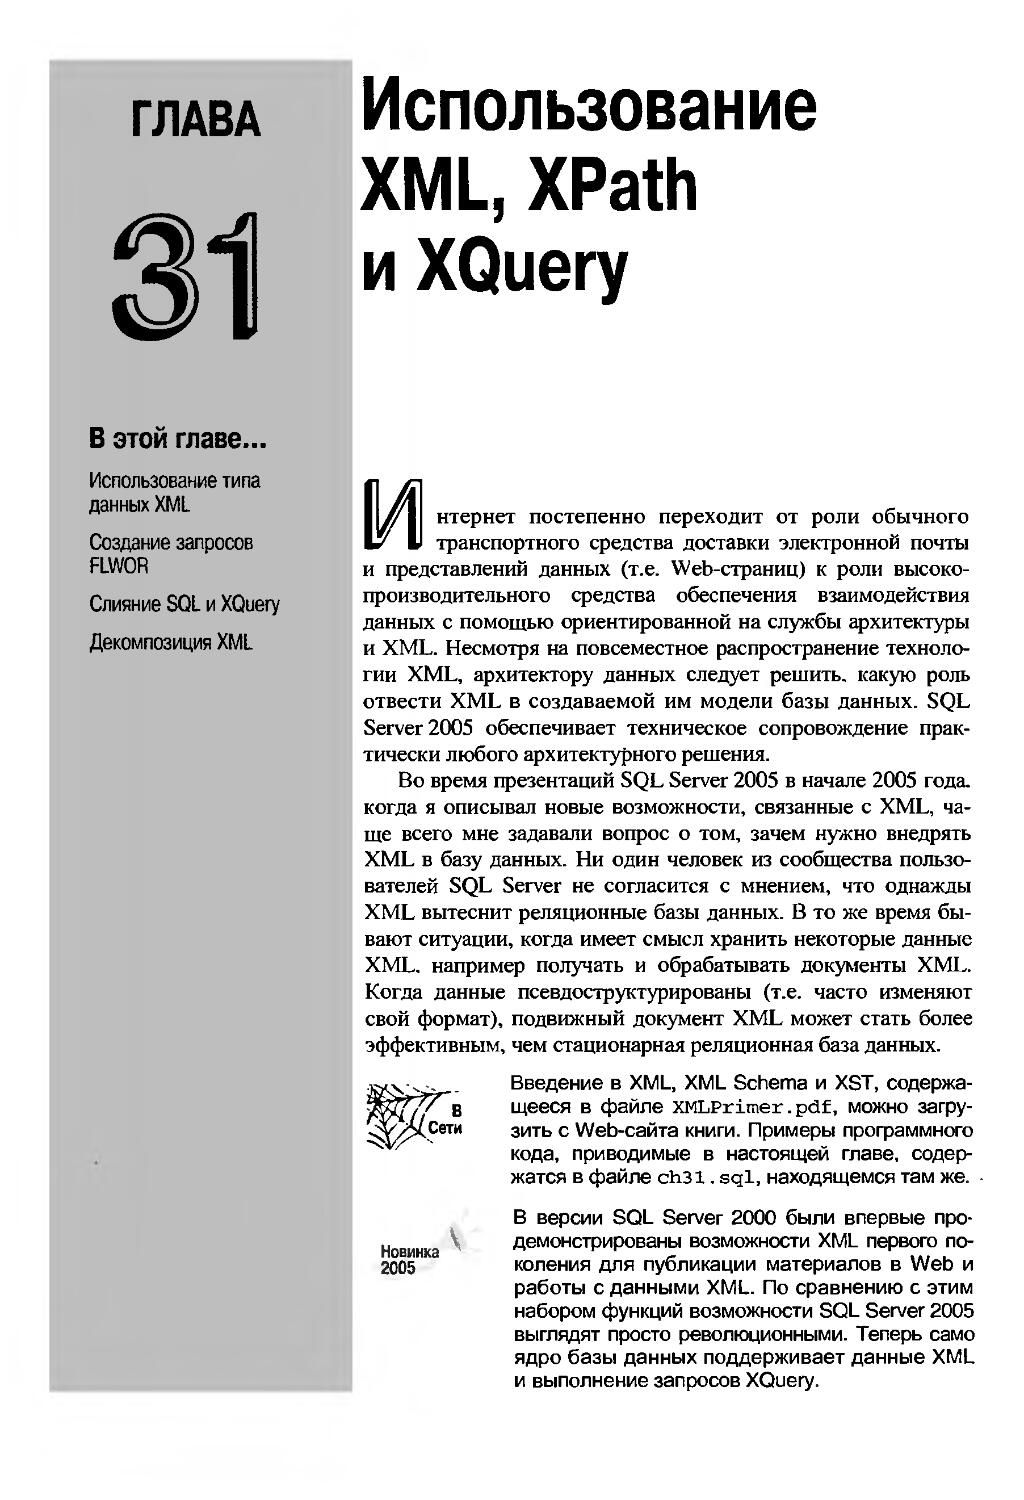 ГЛАВА 31. Использование XML, XPath и XQuery